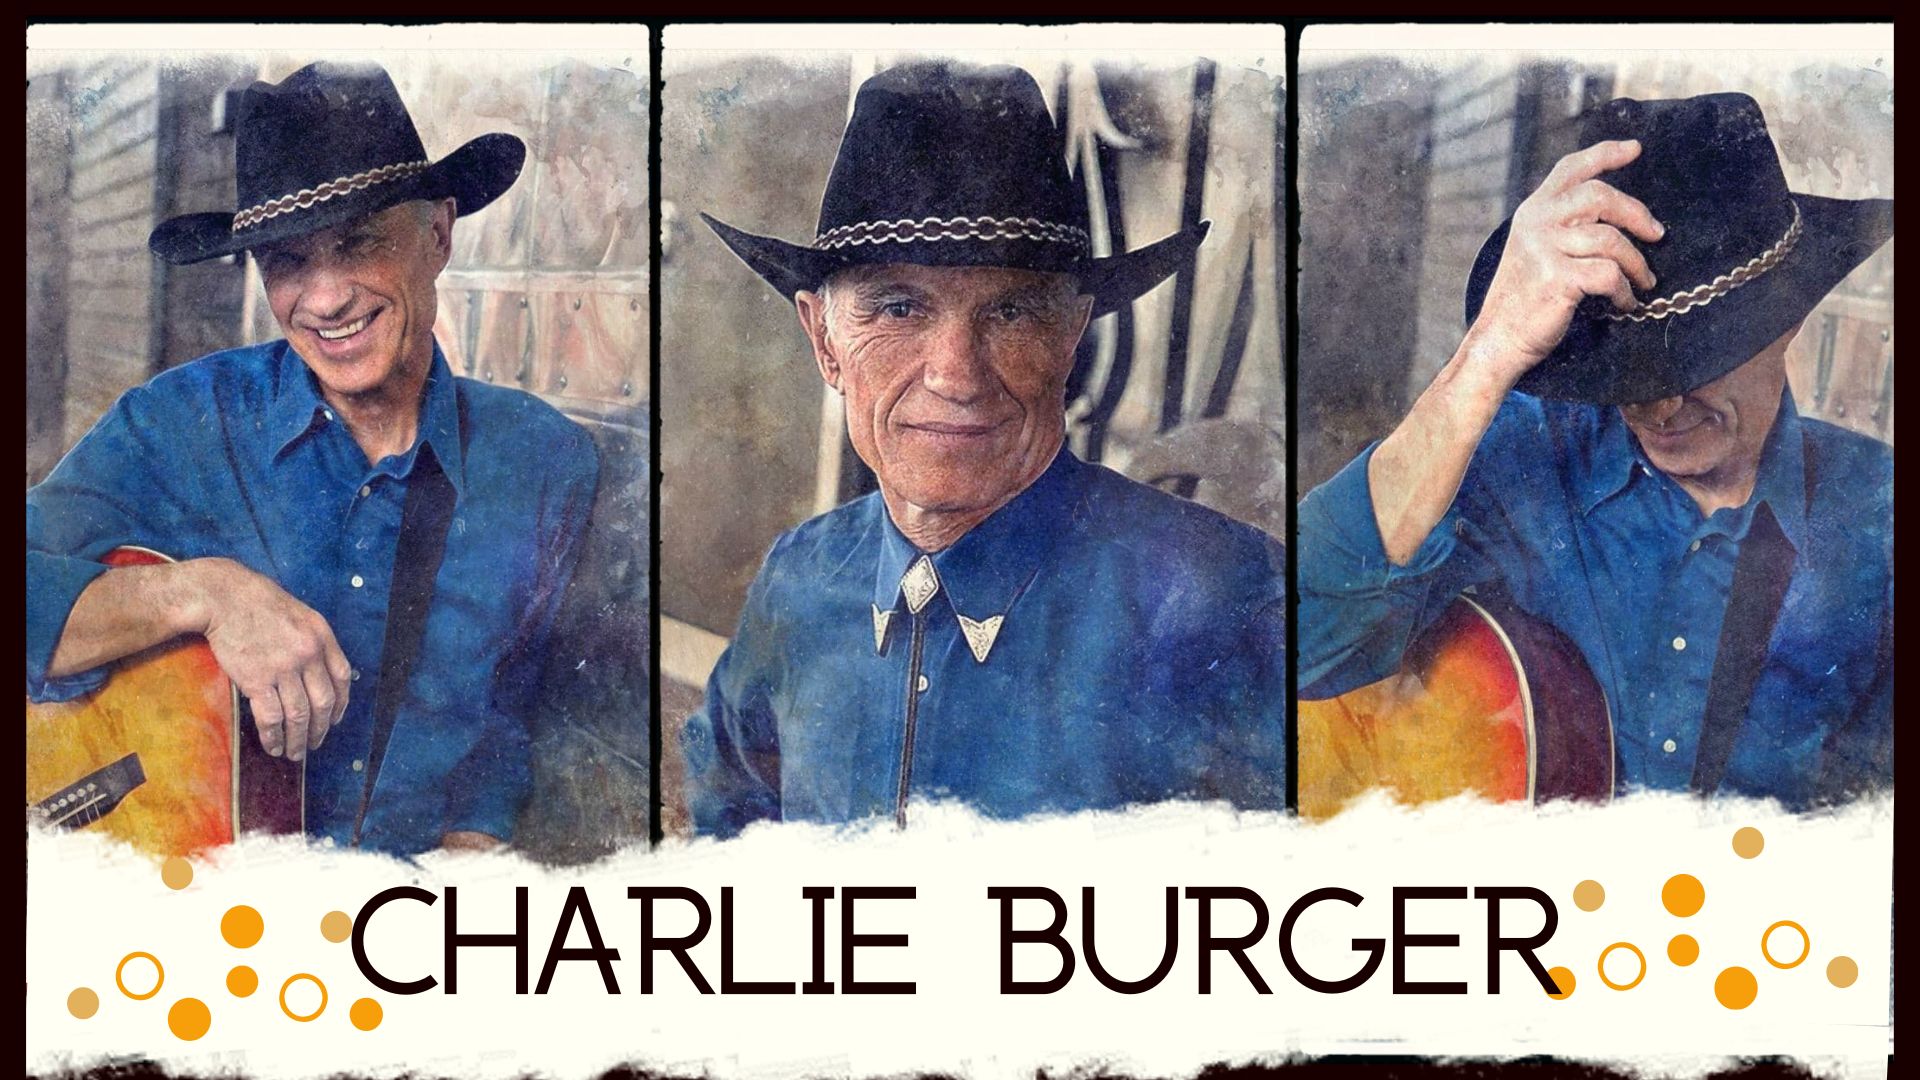 Charlie Burger